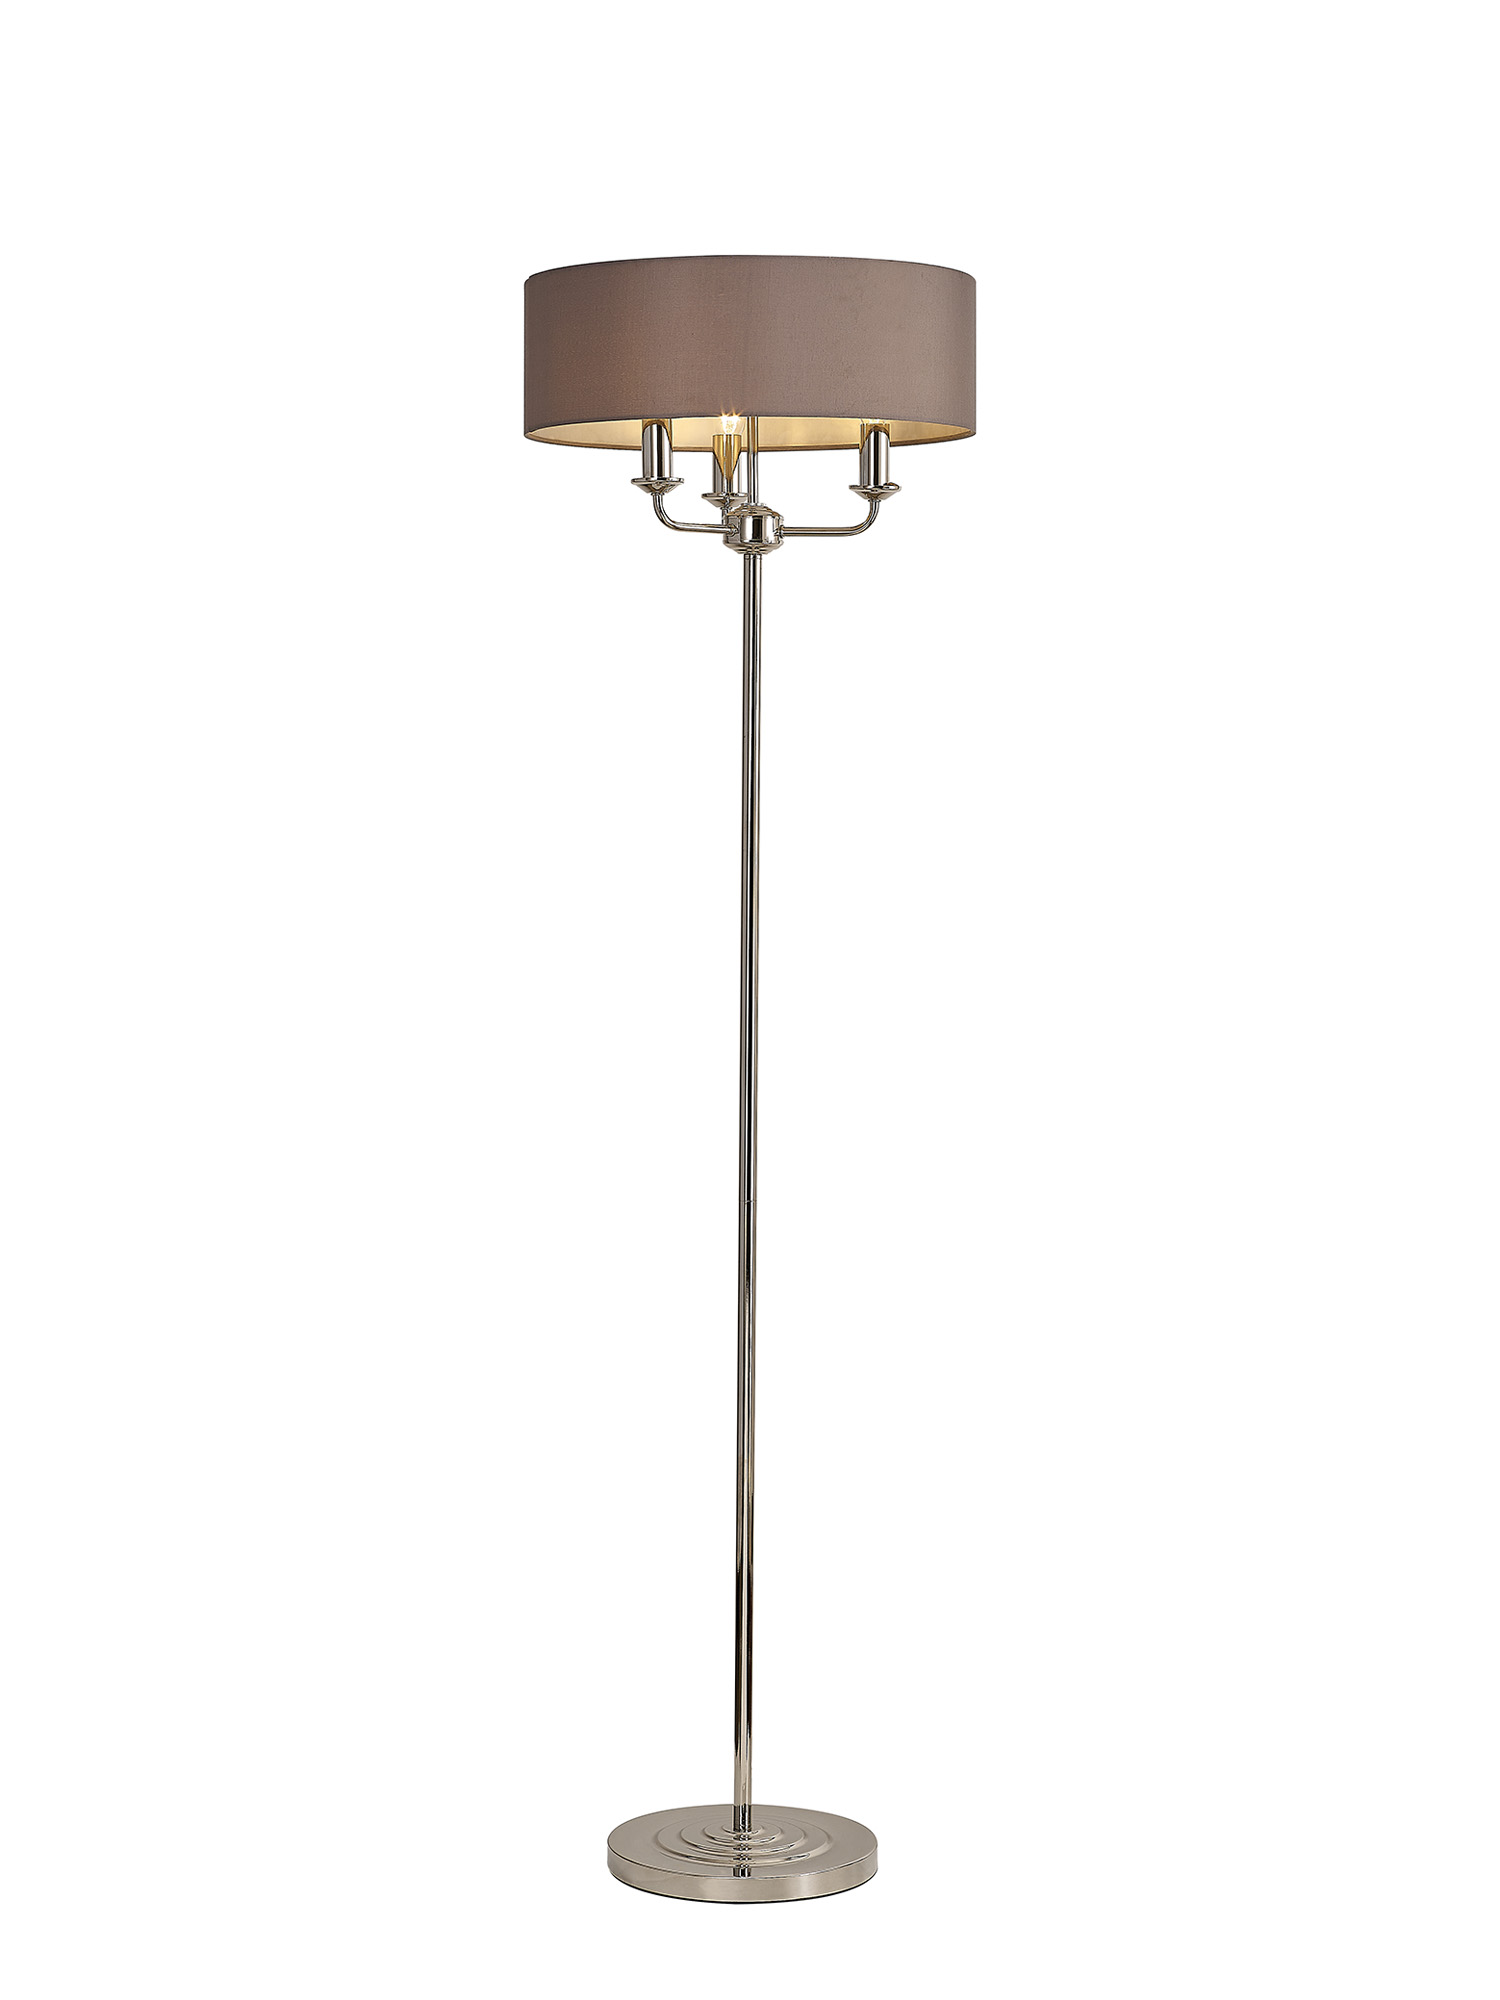 DK0882  Banyan 45cm 3 Light Floor Lamp Polished Nickel, Grey